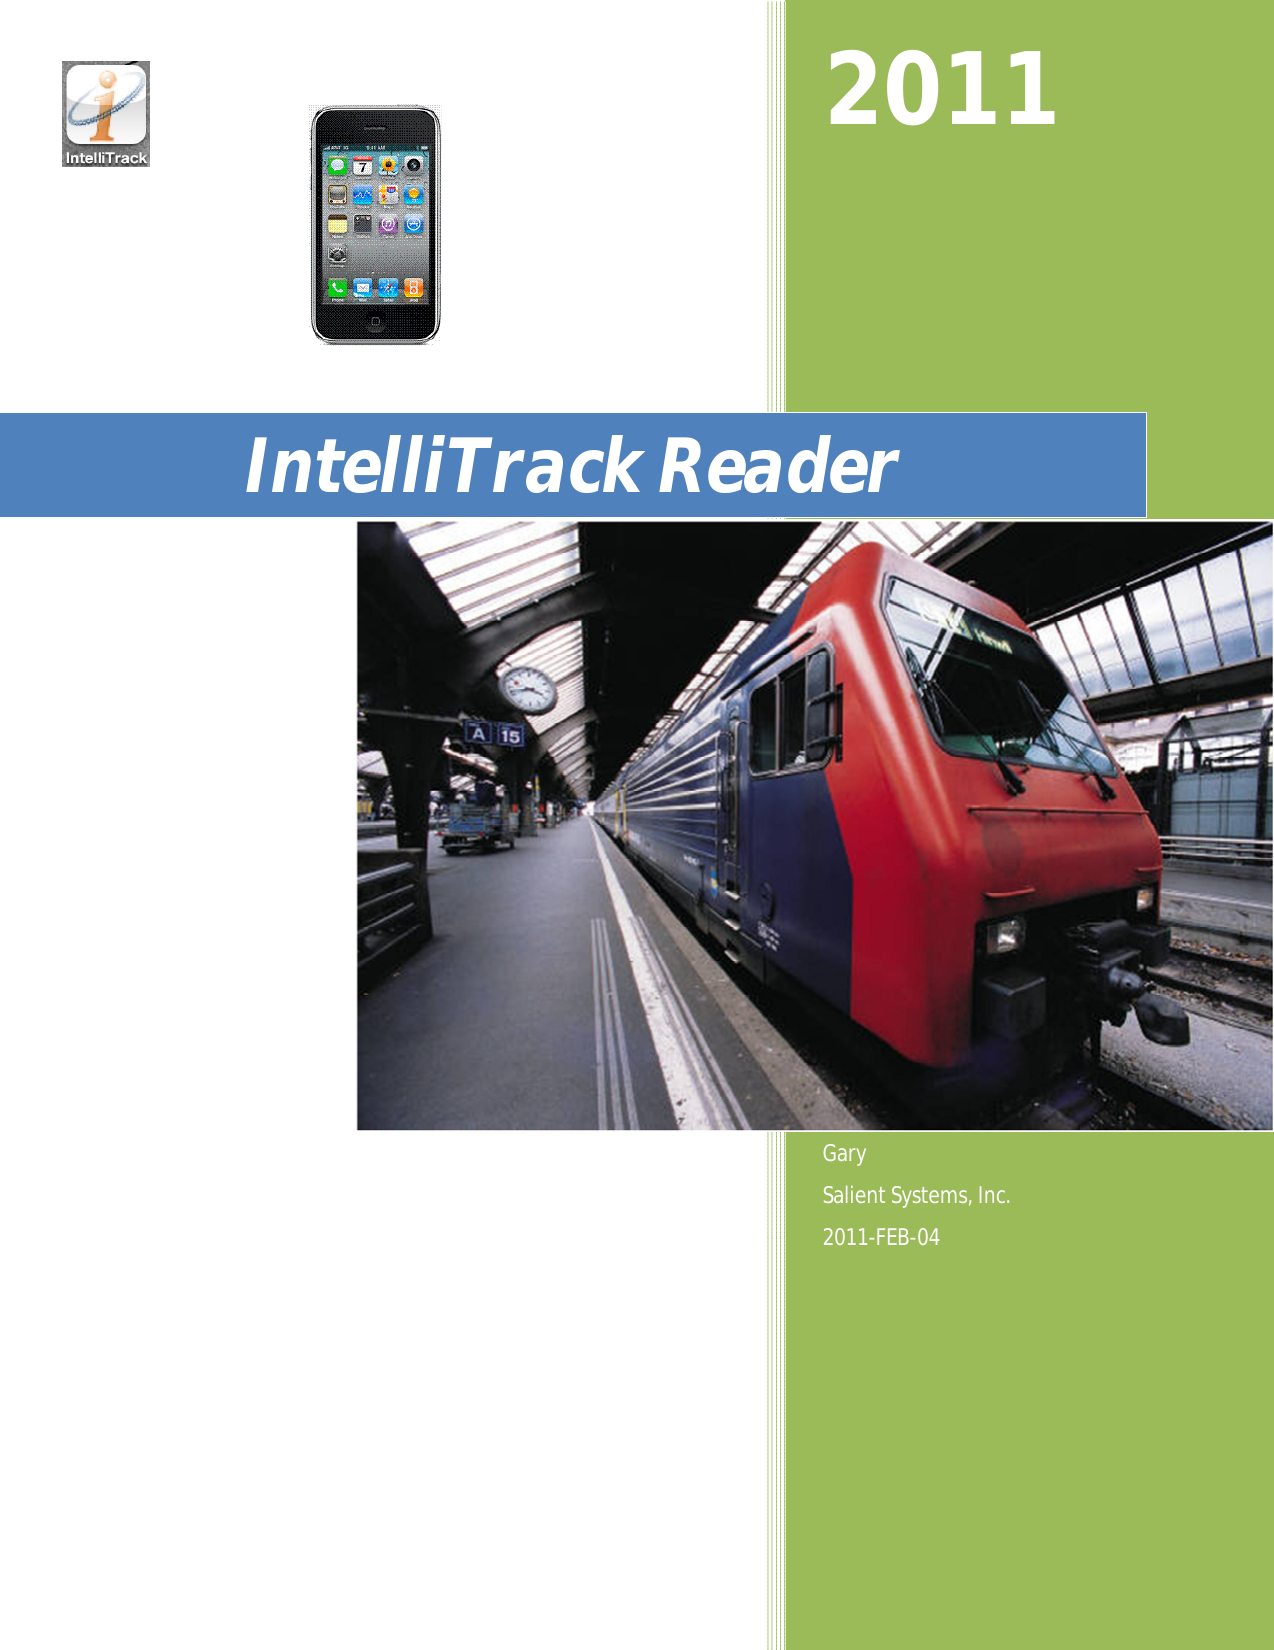                                   2011 Gary Salient Systems, Inc. 2011-FEB-04 IntelliTrack Reader 